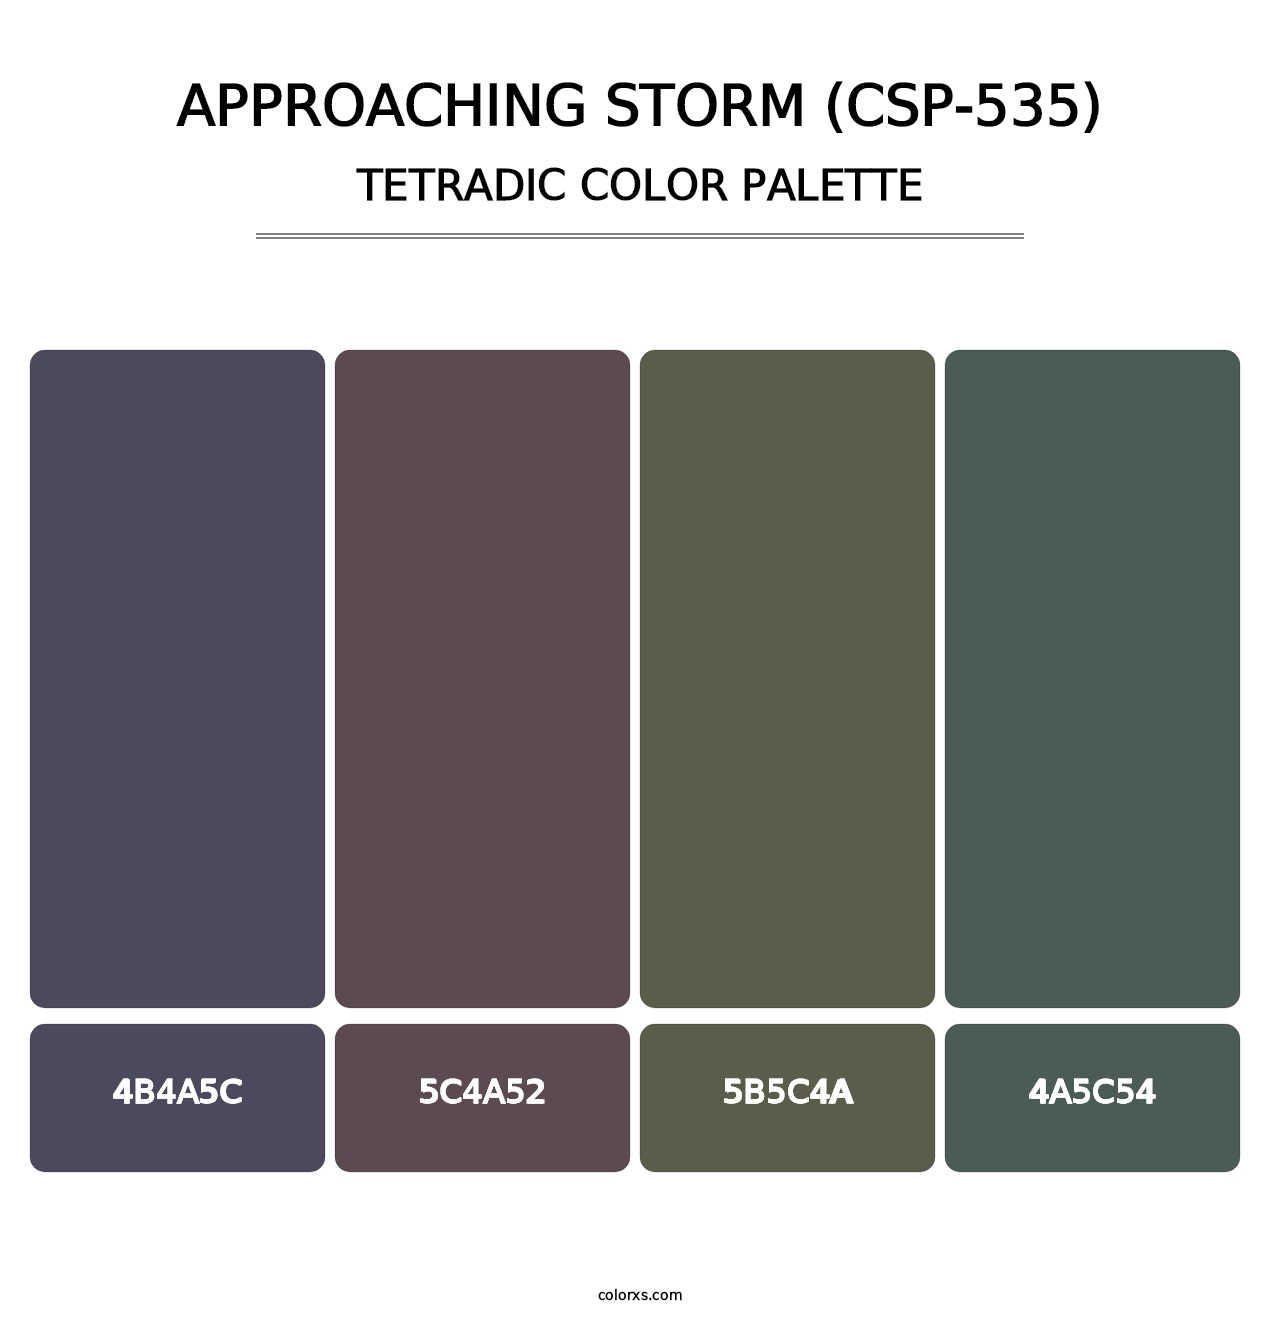 Approaching Storm (CSP-535) - Tetradic Color Palette